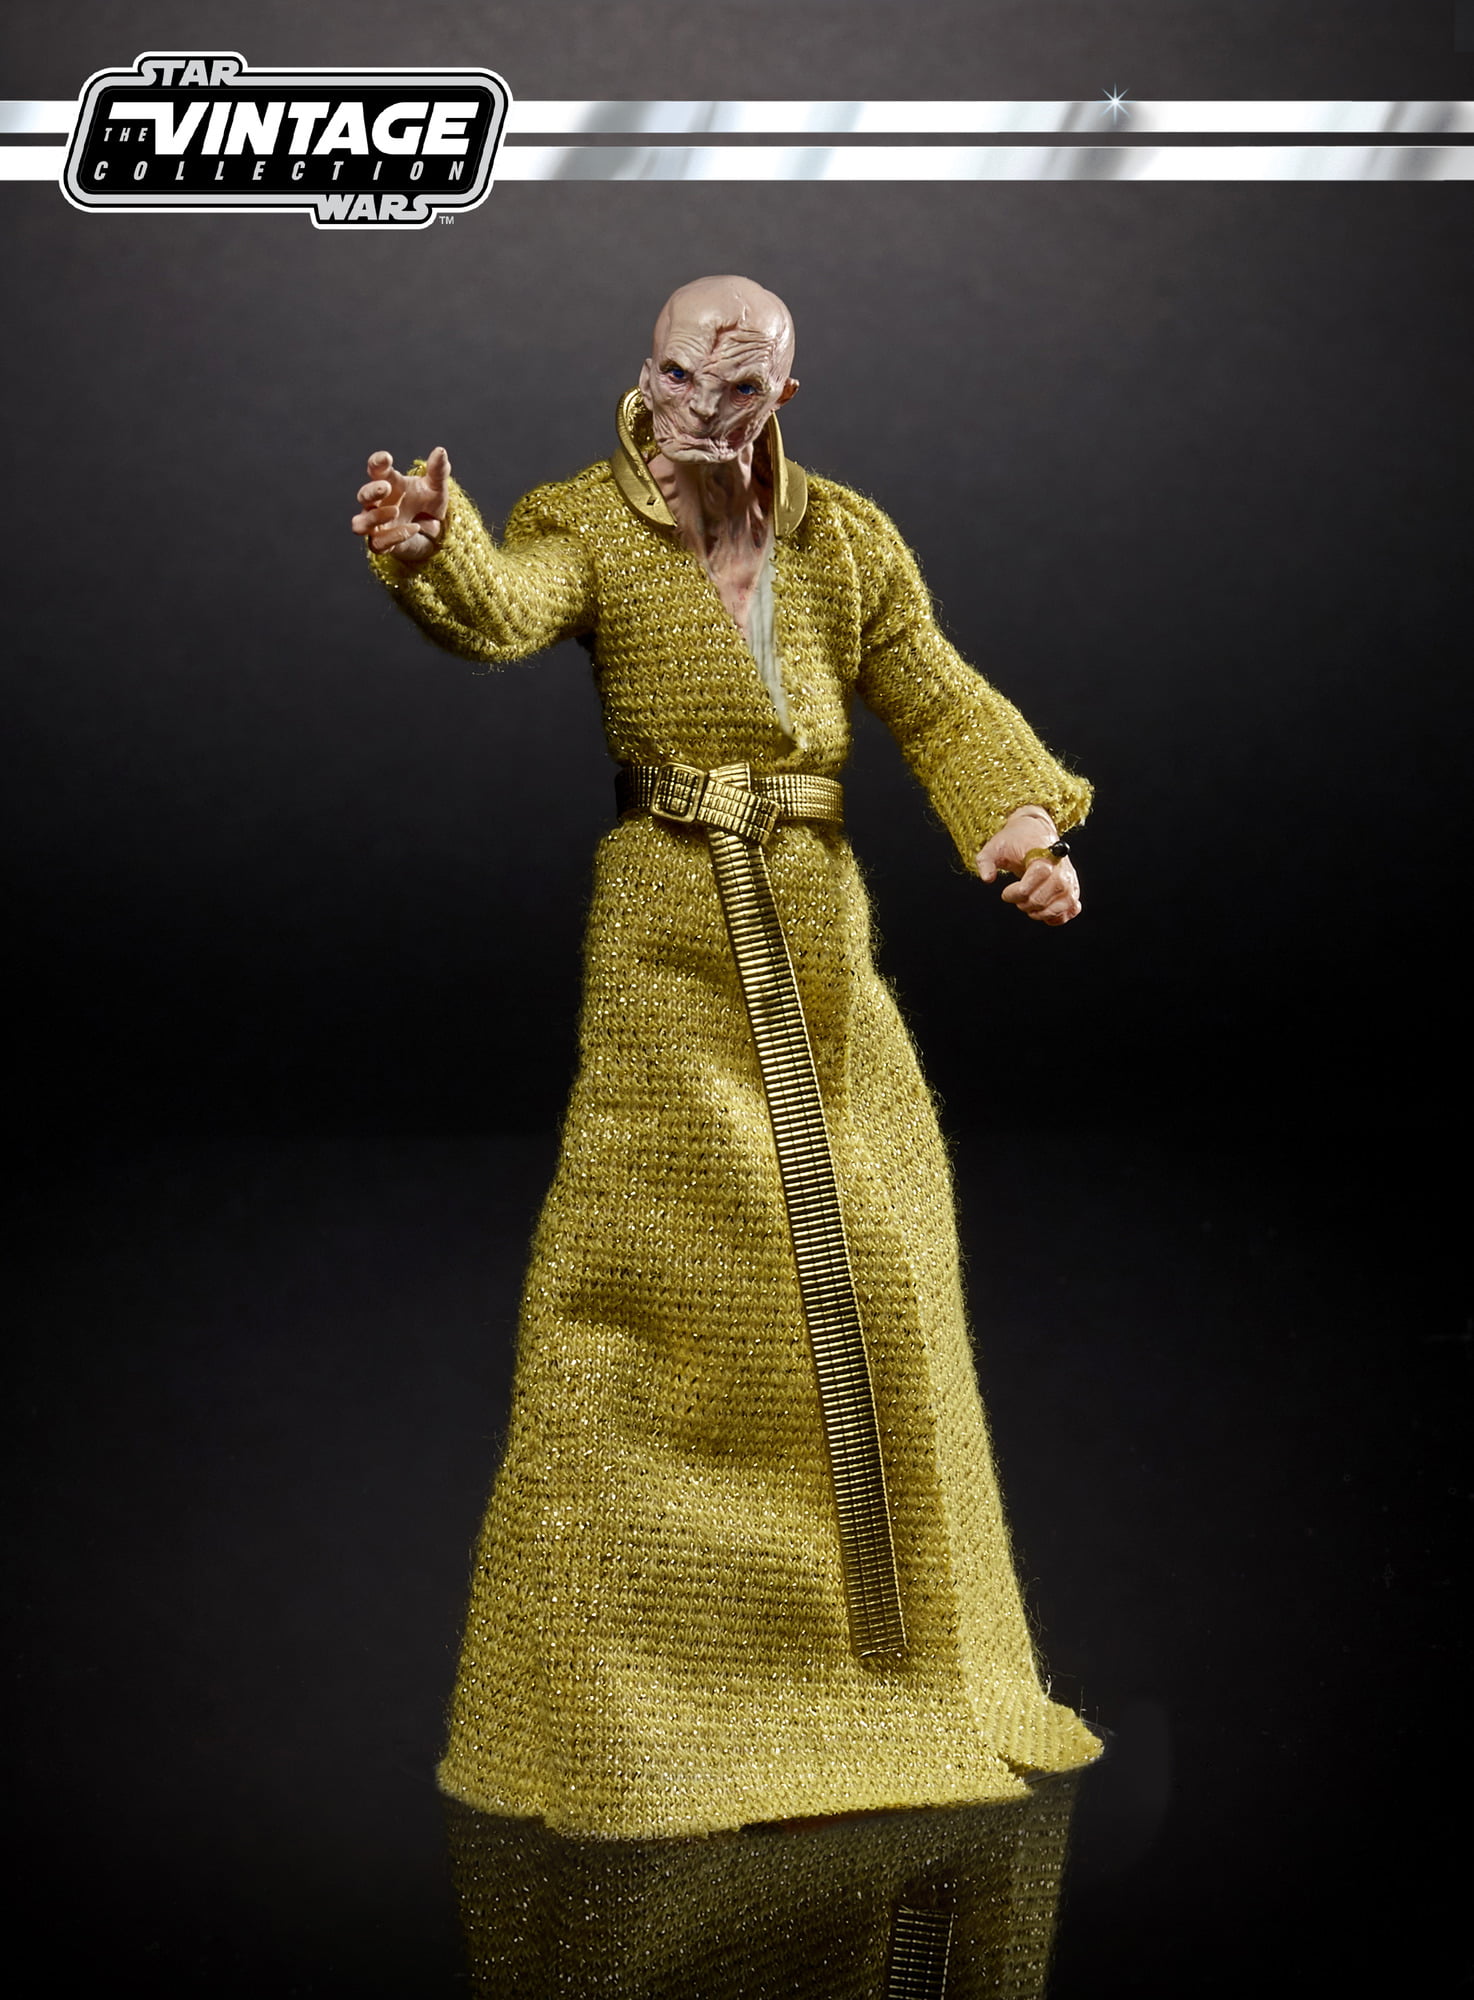 Hasbro Star Wars The Vintage Collection Supreme Leader Snoke 3.75-inch Action Figure for sale online